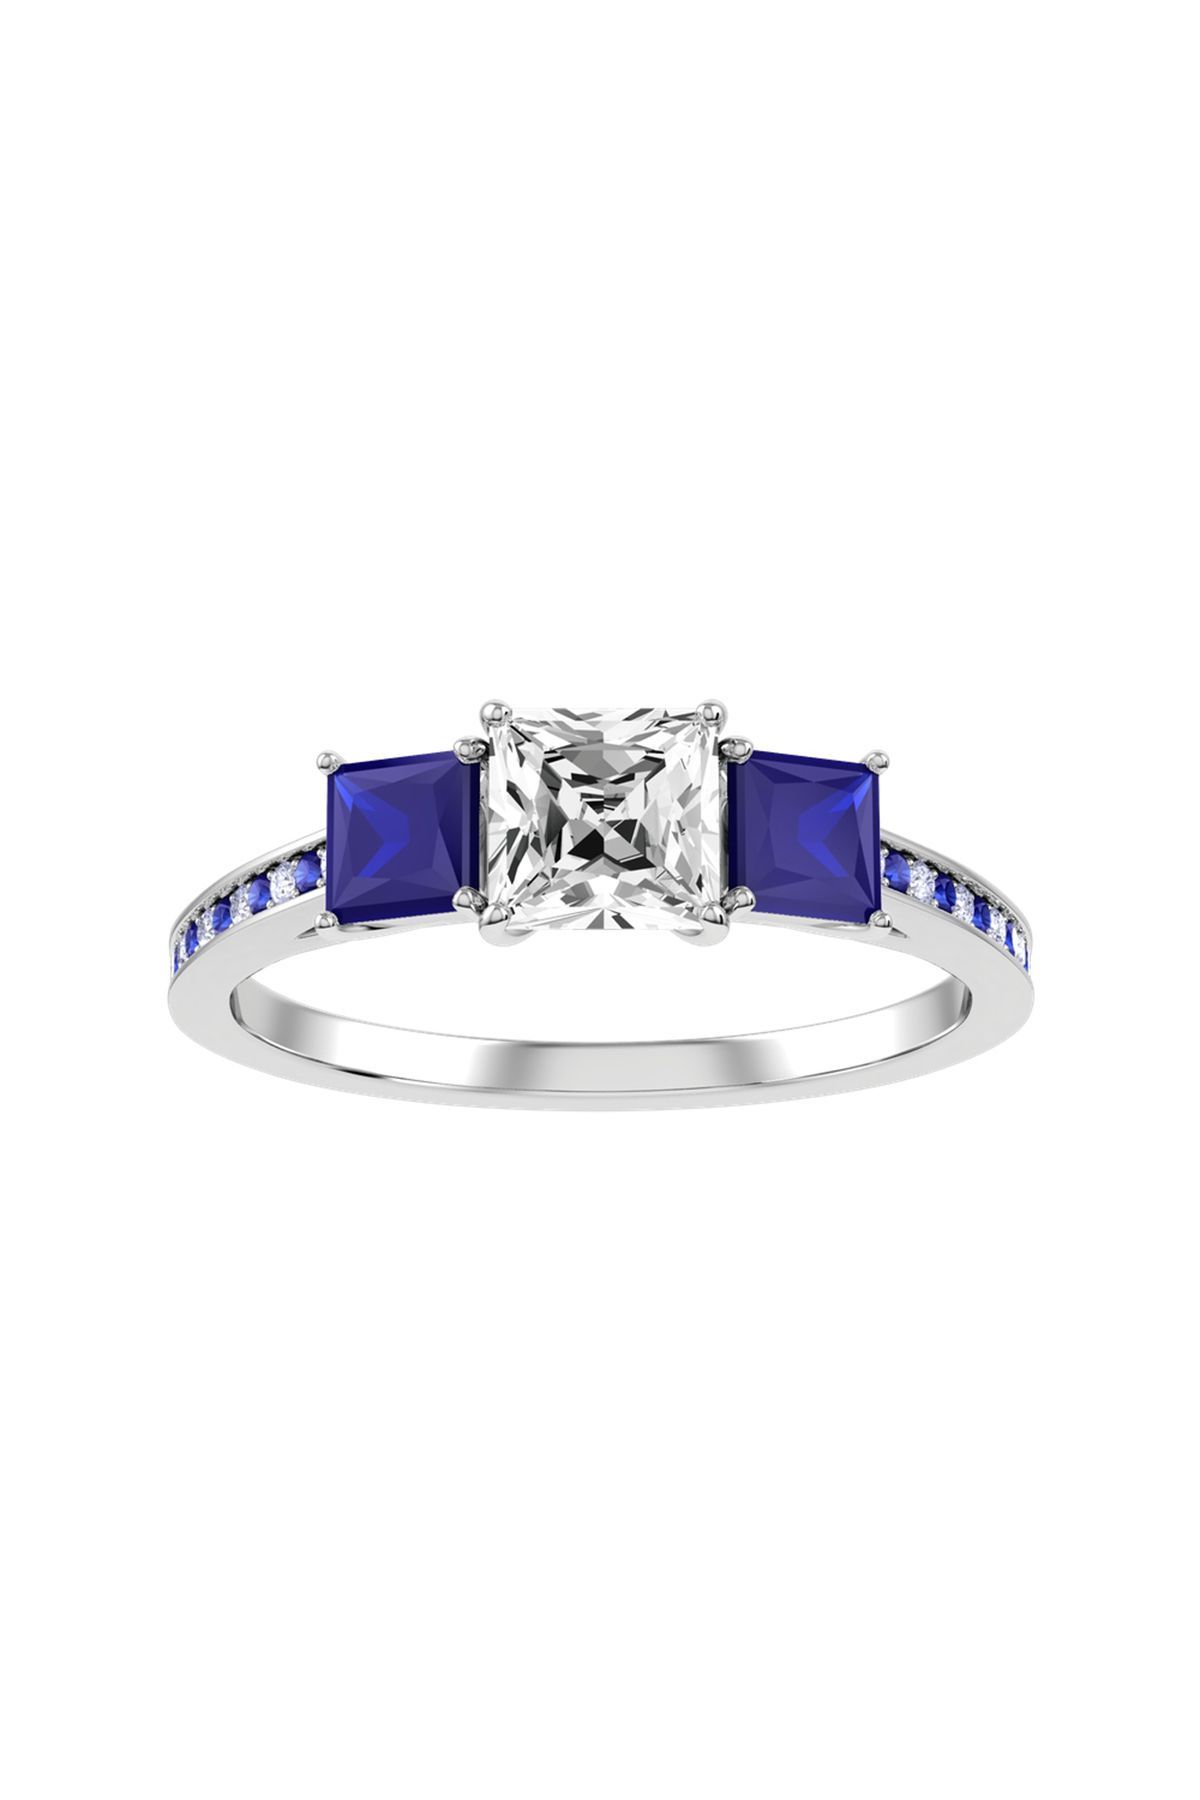 1.50 Ct Princess Cut Sapphire & Moissanite Engagement Ring 14K White Gold  Over | eBay